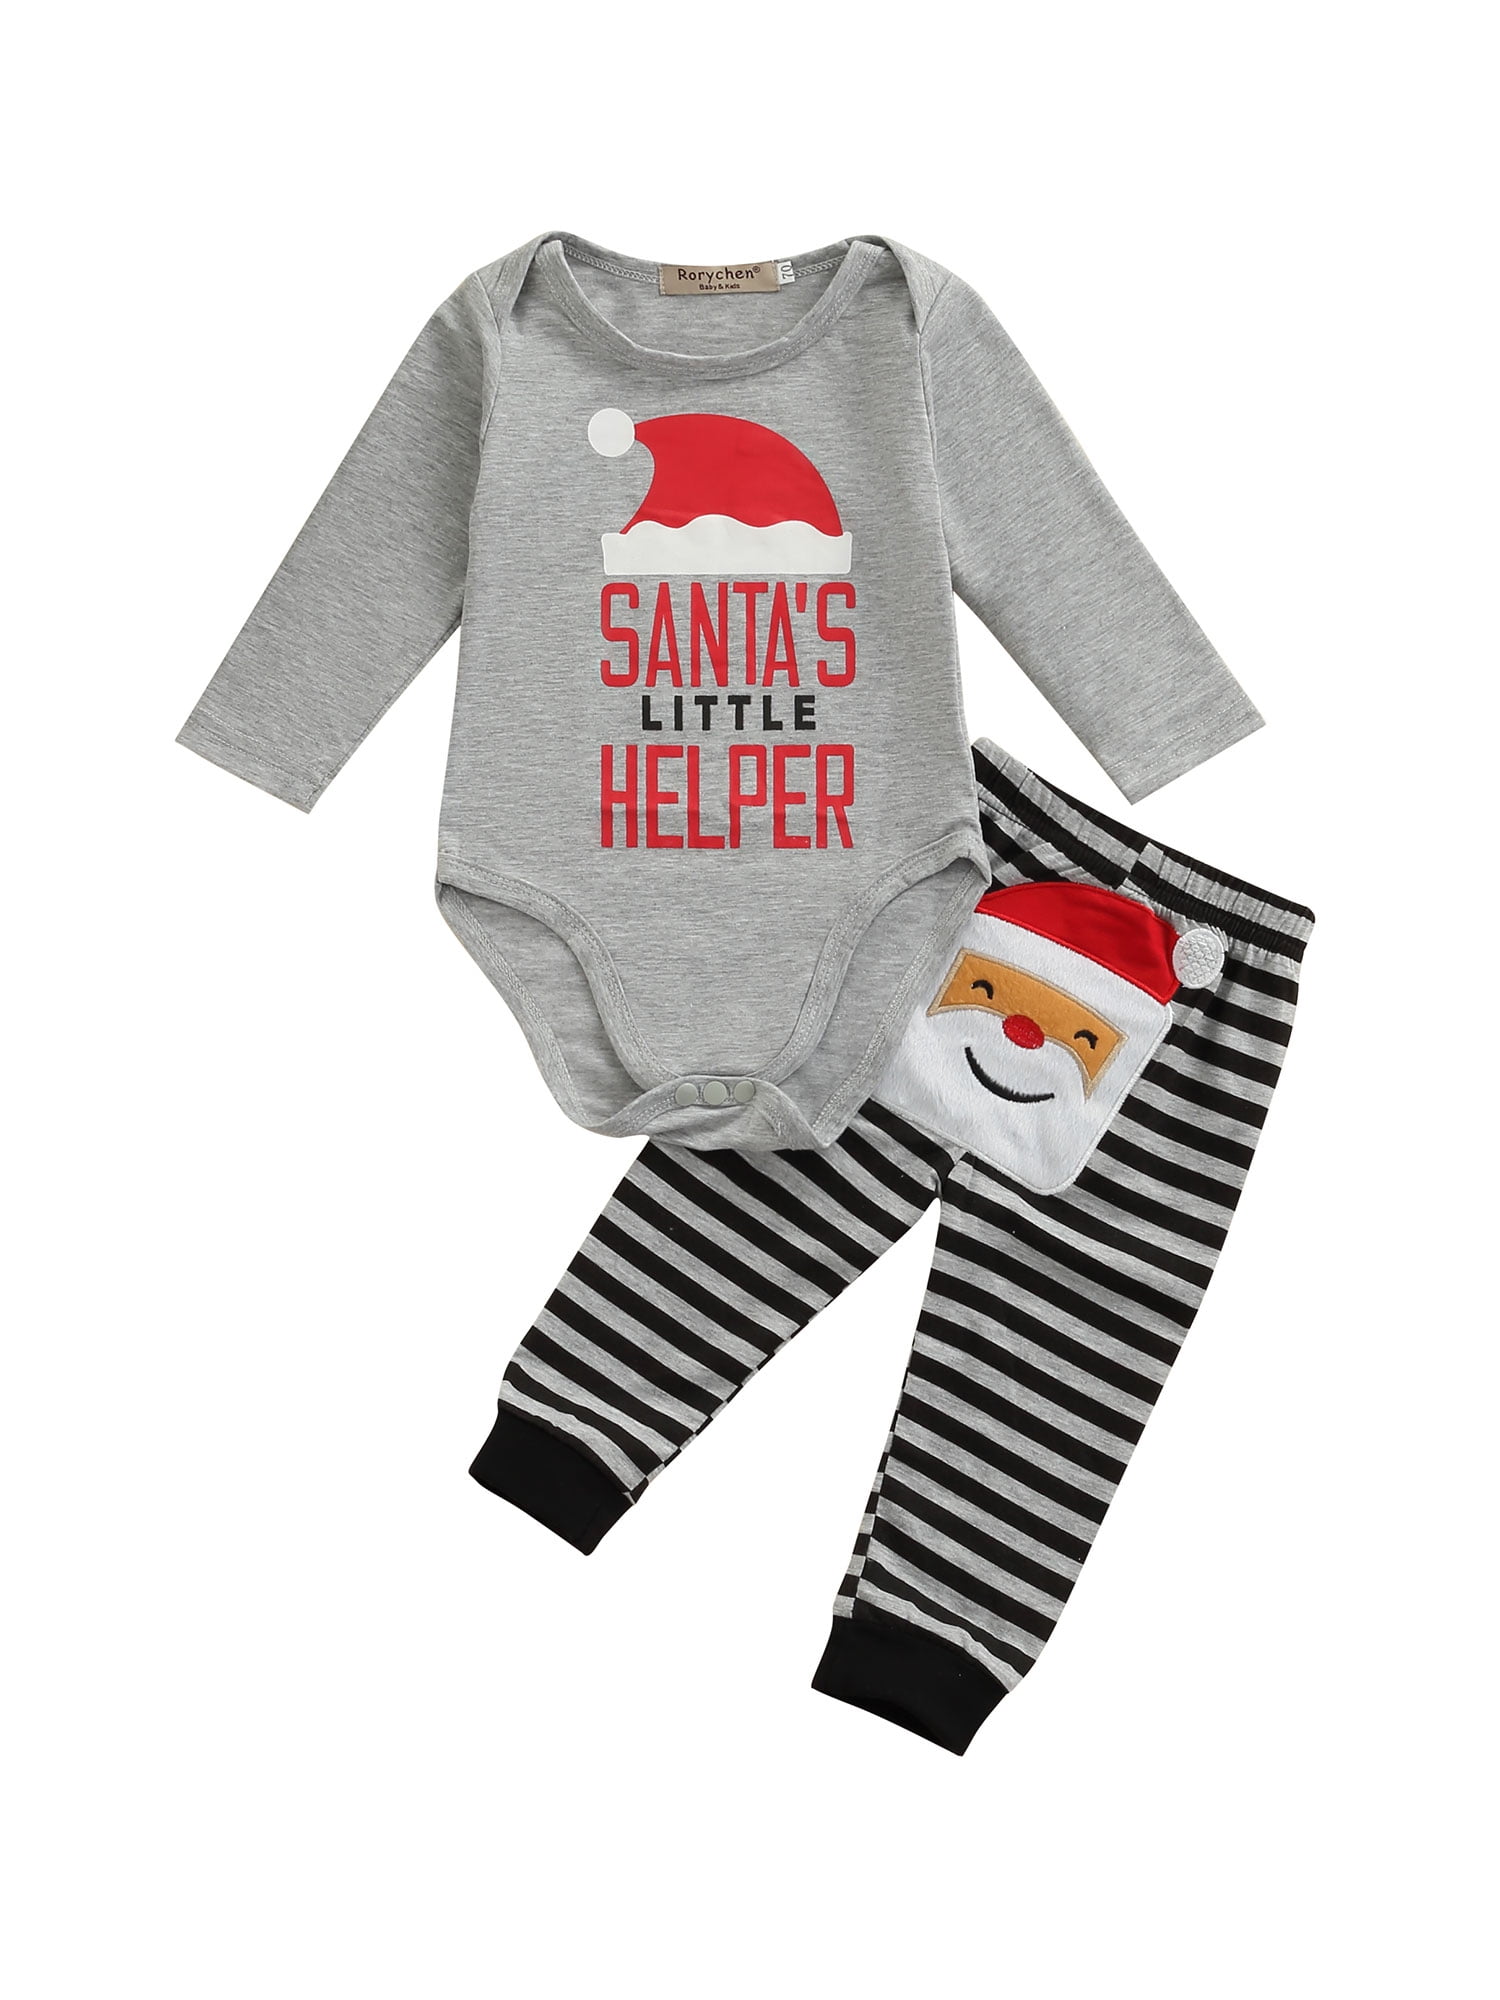 USA Newborn Baby Boys Girls Santa Romper T-shirt Pants Outfits Clothes hgtrewq 